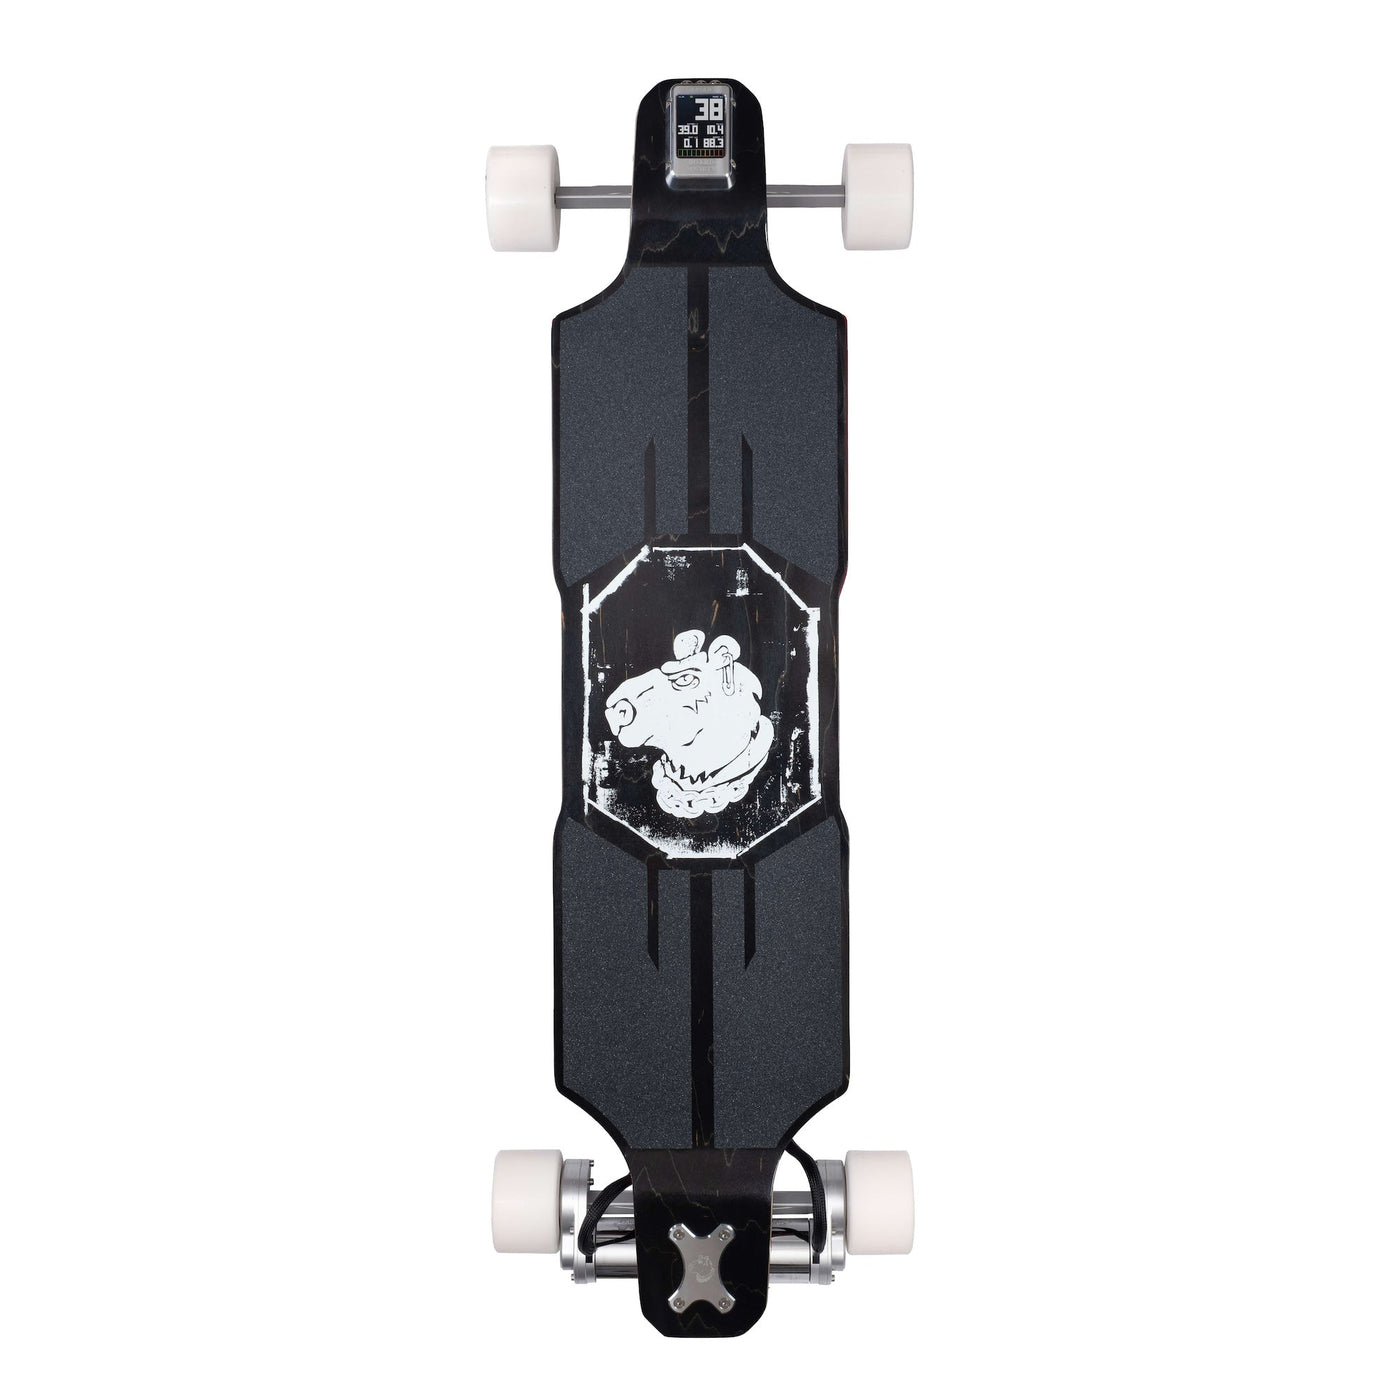 ONE Electric Skateboard - Black by Defiant